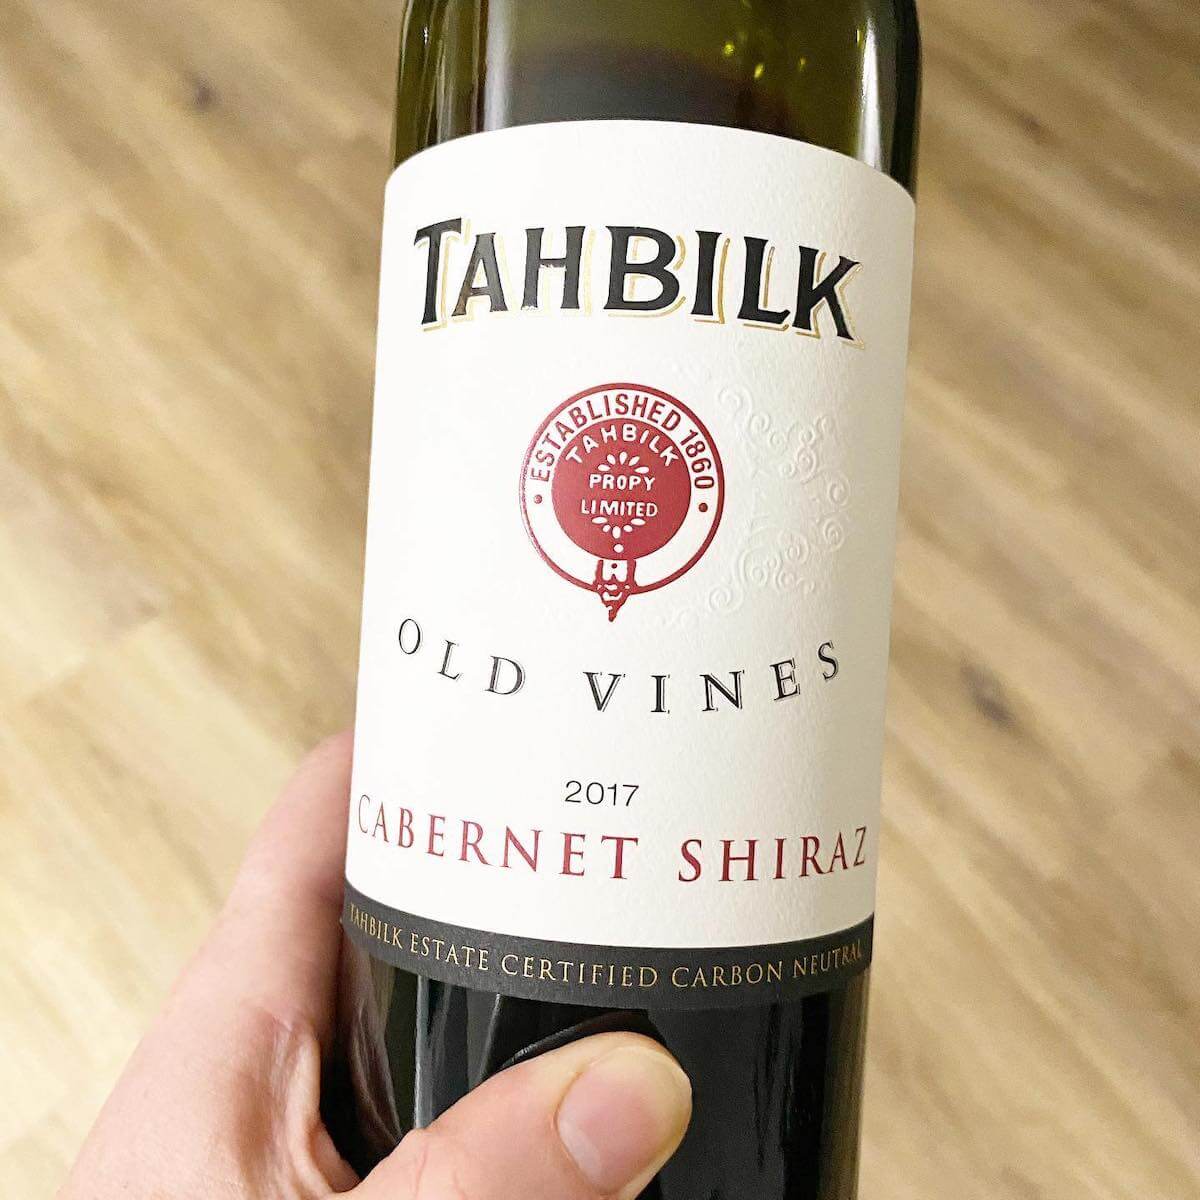 Tahbilk Old Vines 2015 & 2017 Cabernet Shiraz